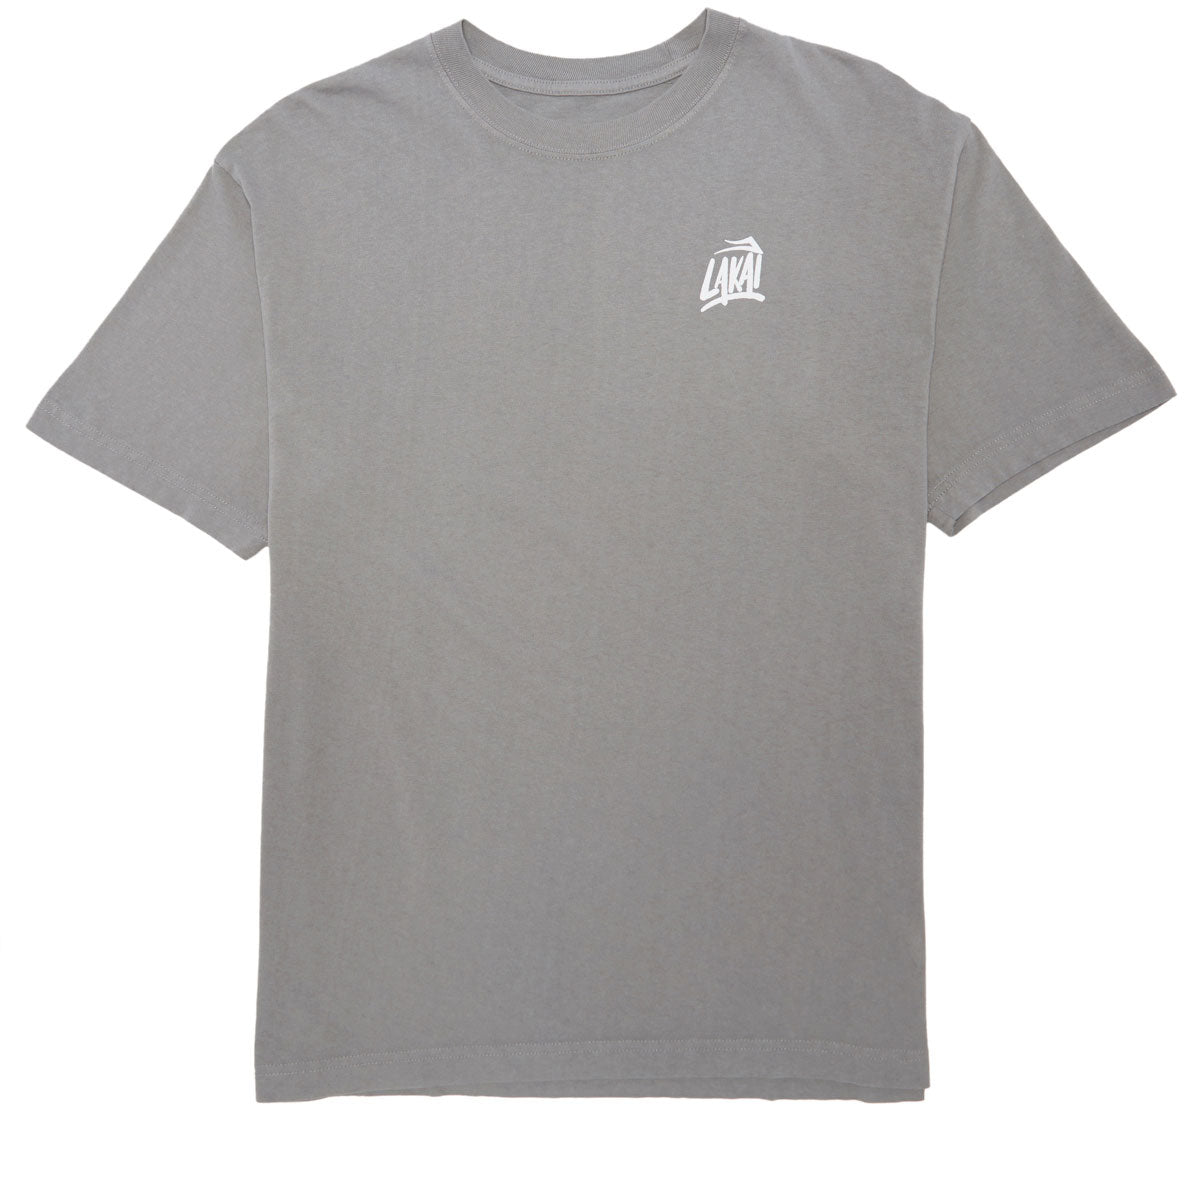 Lakai Brush T-Shirt - Charcoal image 1